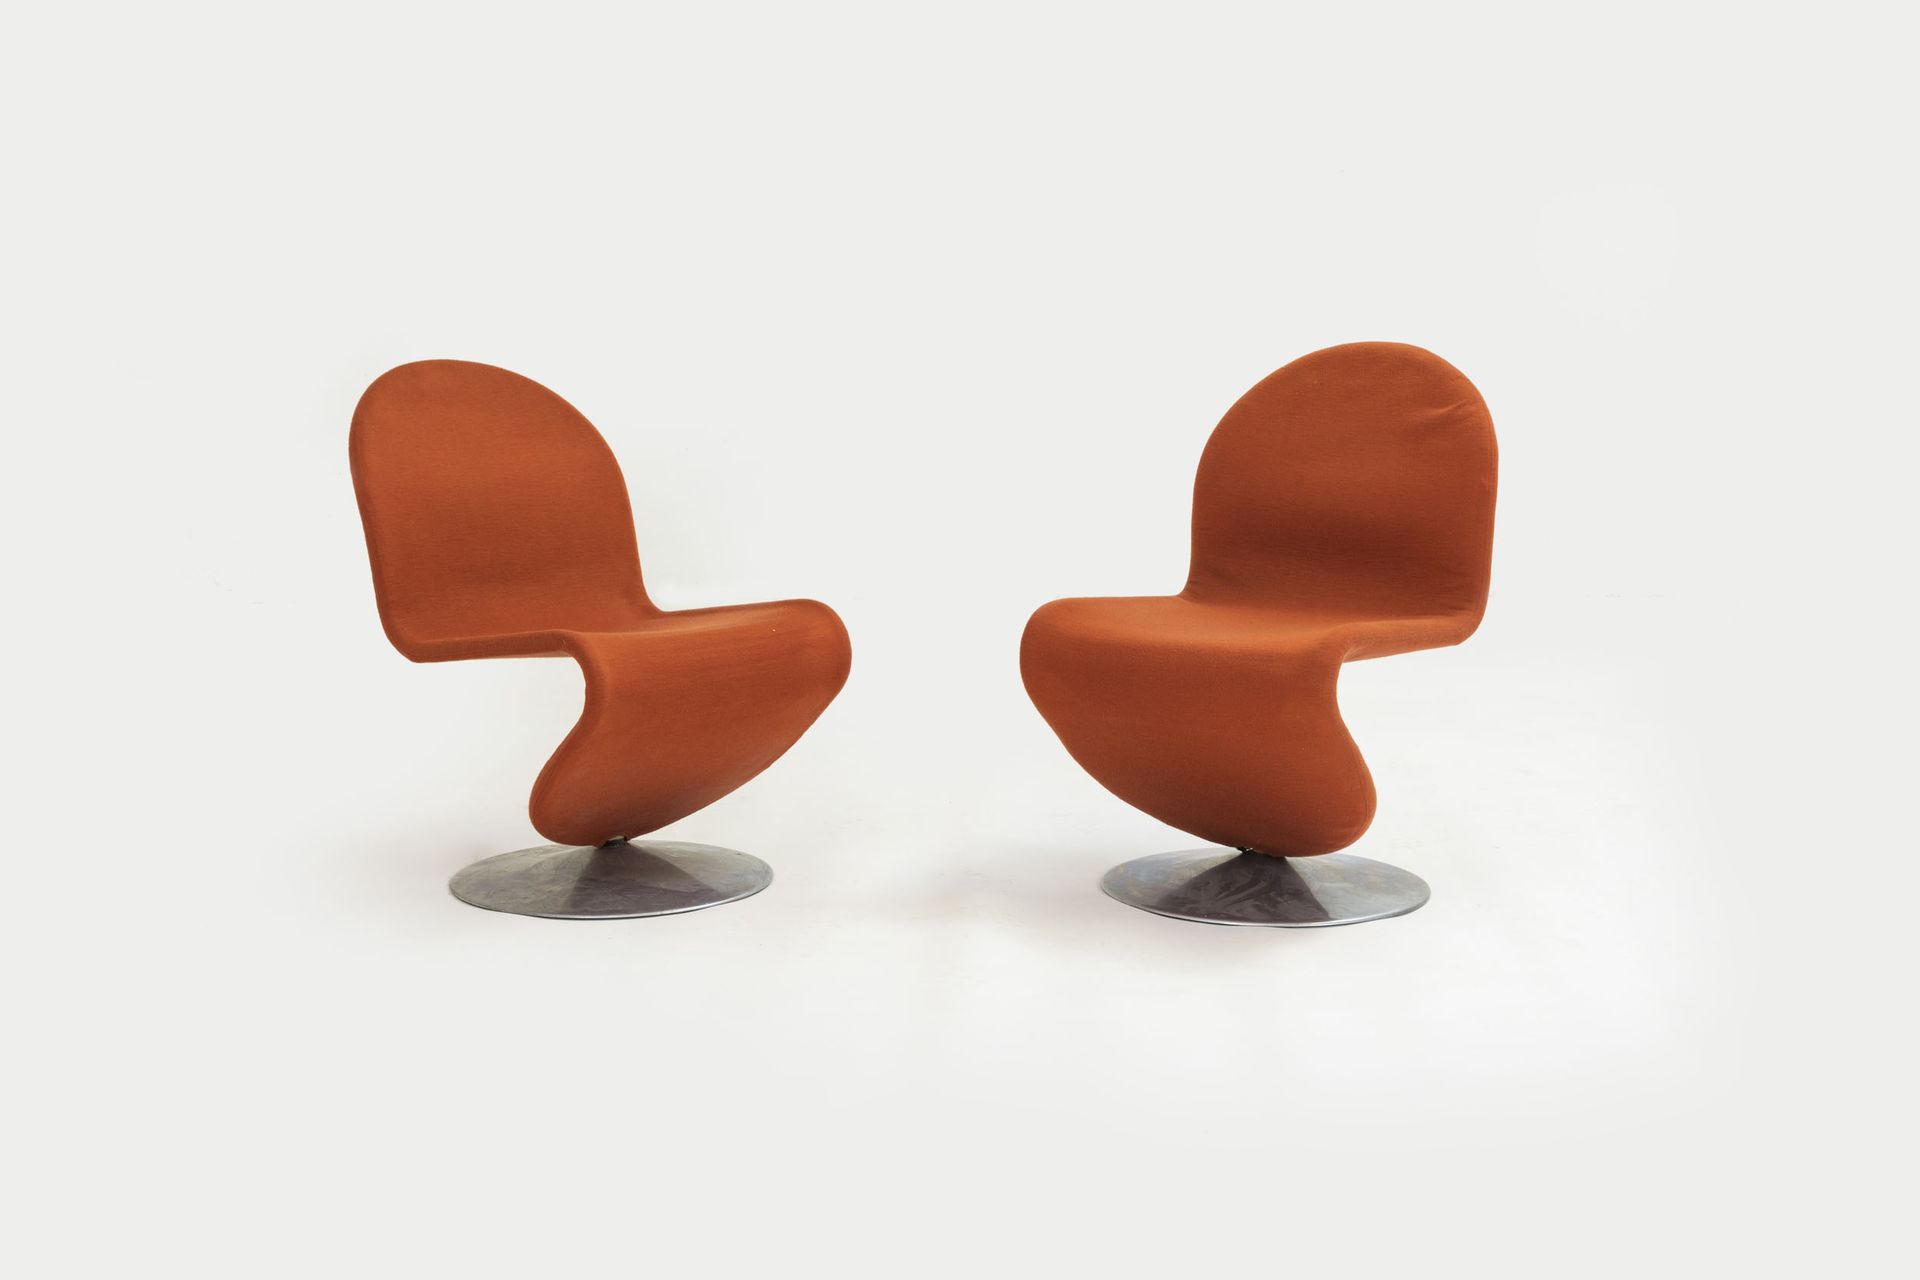 VERNER PANTON 1:2:3系列的一对扶手椅。抛光钢，织物覆盖。
弗里茨-汉森公司，丹麦 1975年。
80x50x50厘米
一对扶手椅由V.PANT&hellip;